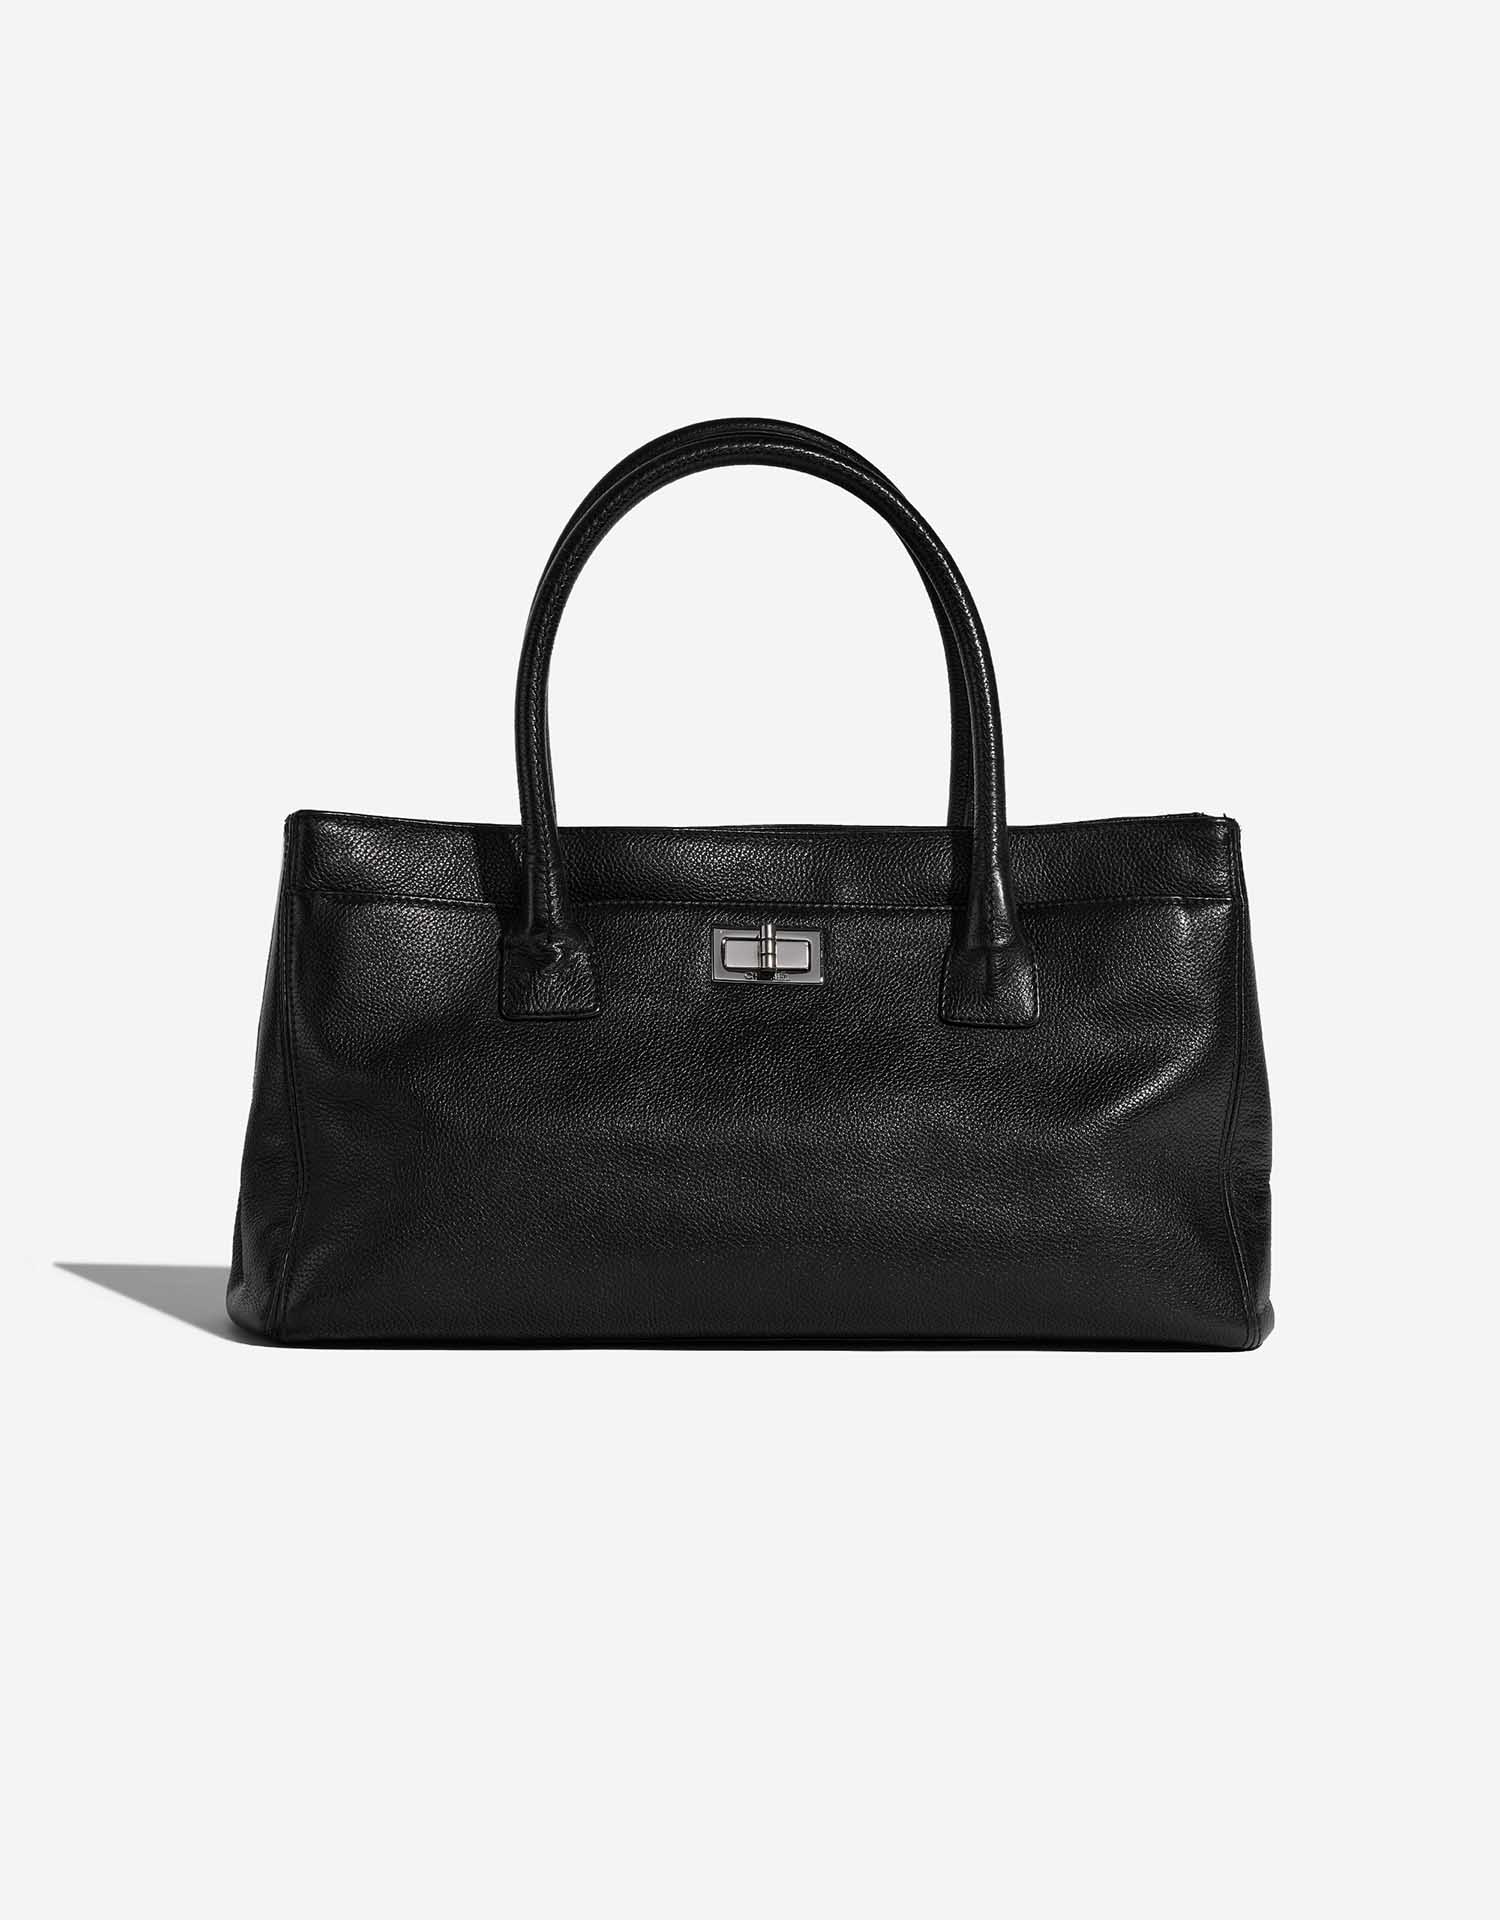 Chanel Cerf Executive Tote Leather Medium Black 1210081